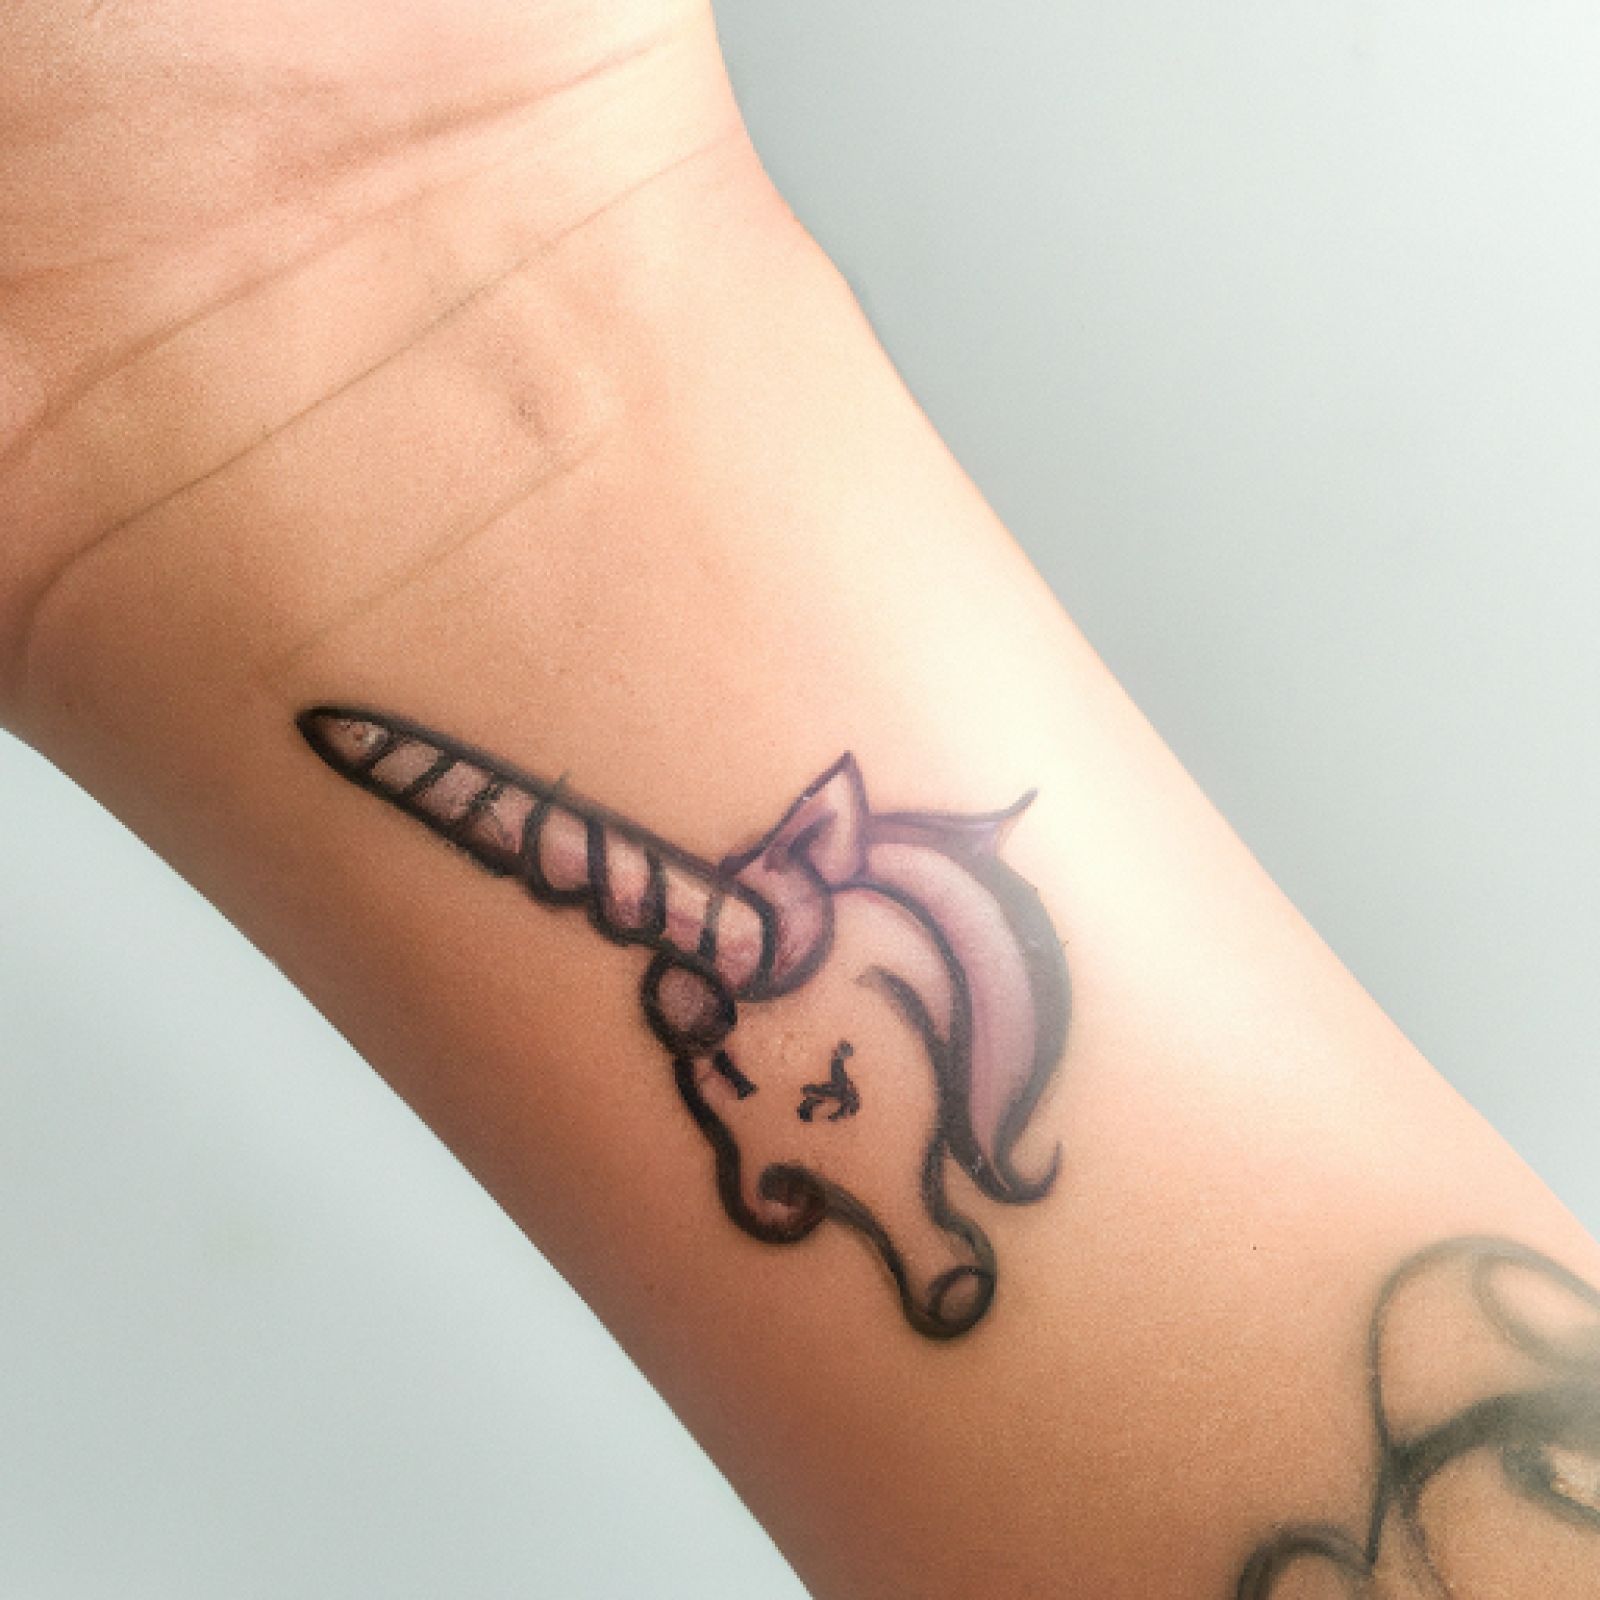 Unicorn tattoo on wrist for men